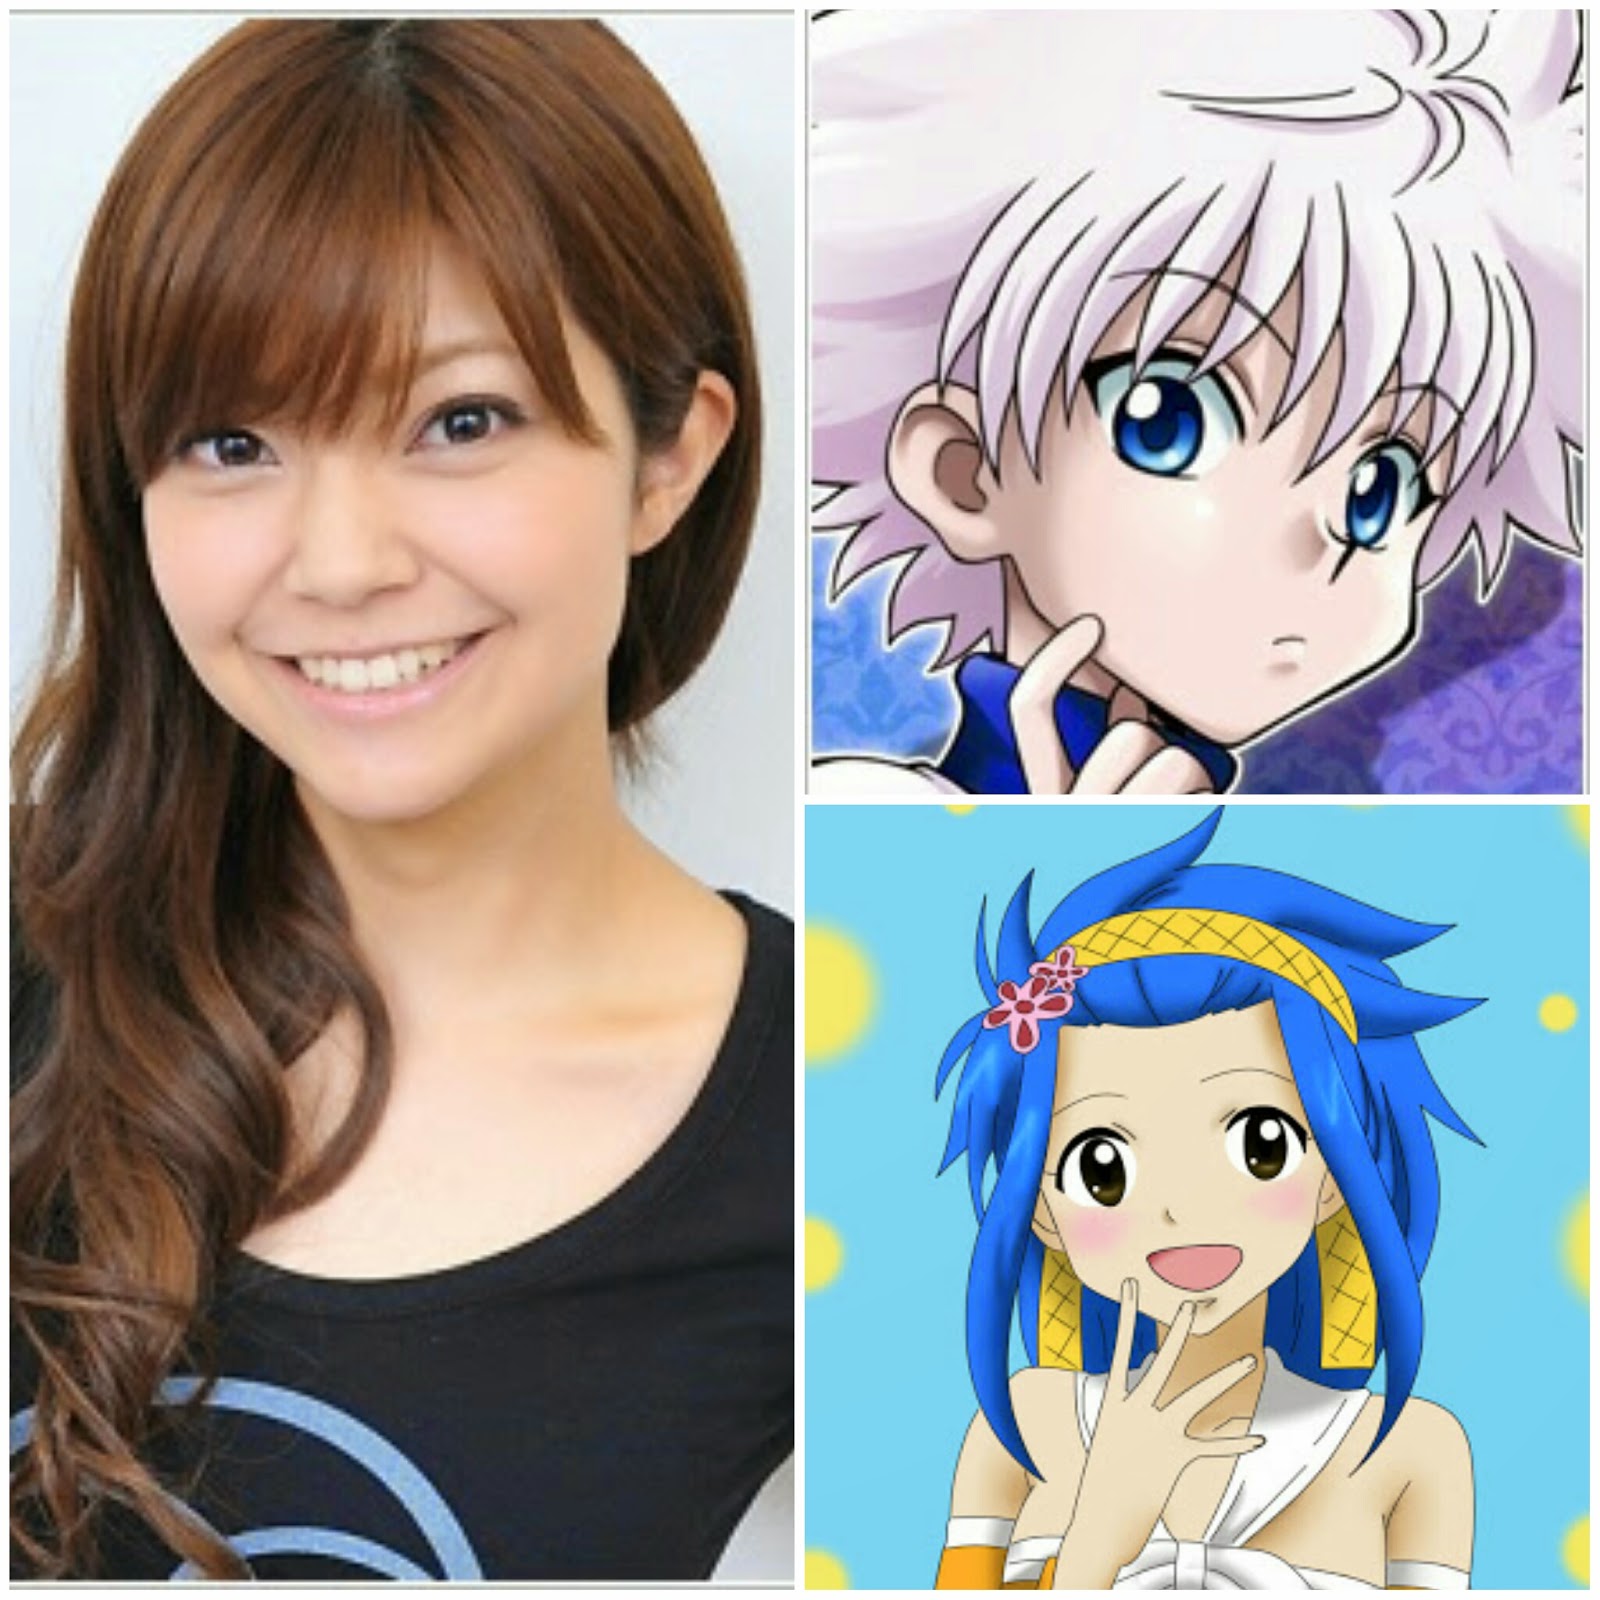 Kozure-San: Anime Nisekoi tem elenco de dubladores divulgado.